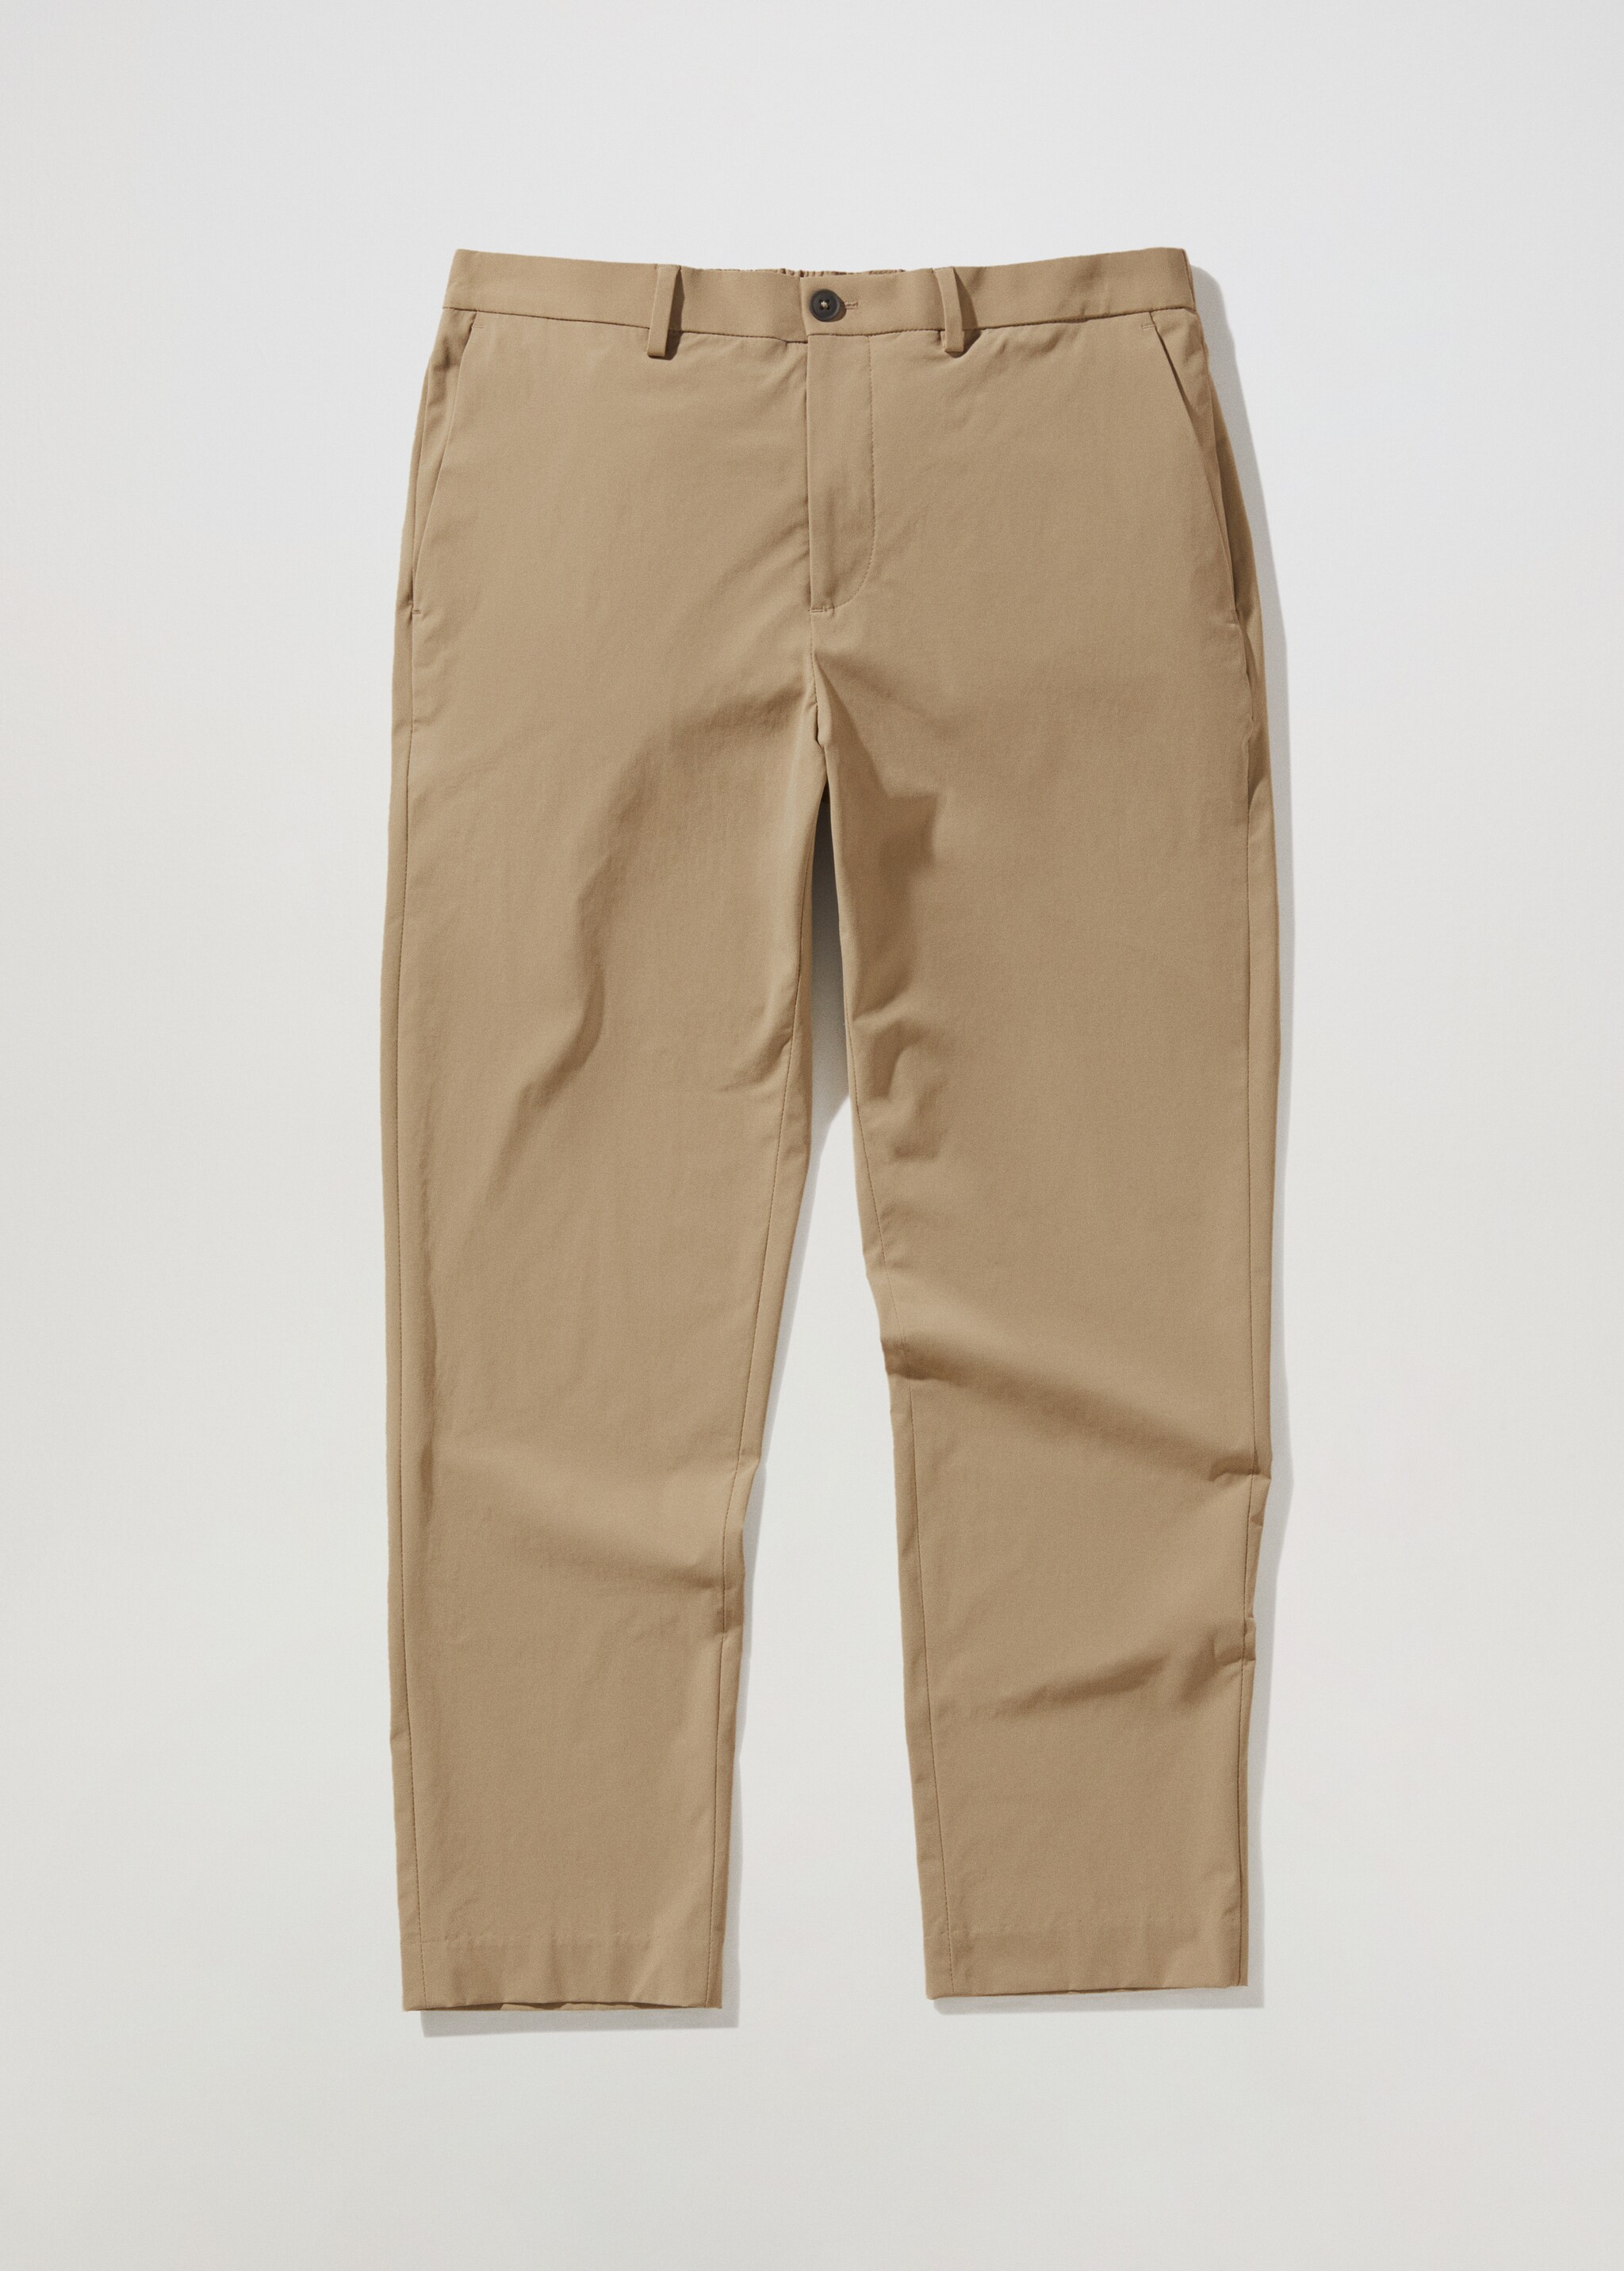 Pantalons vestit slim fit stretch - Article sense model